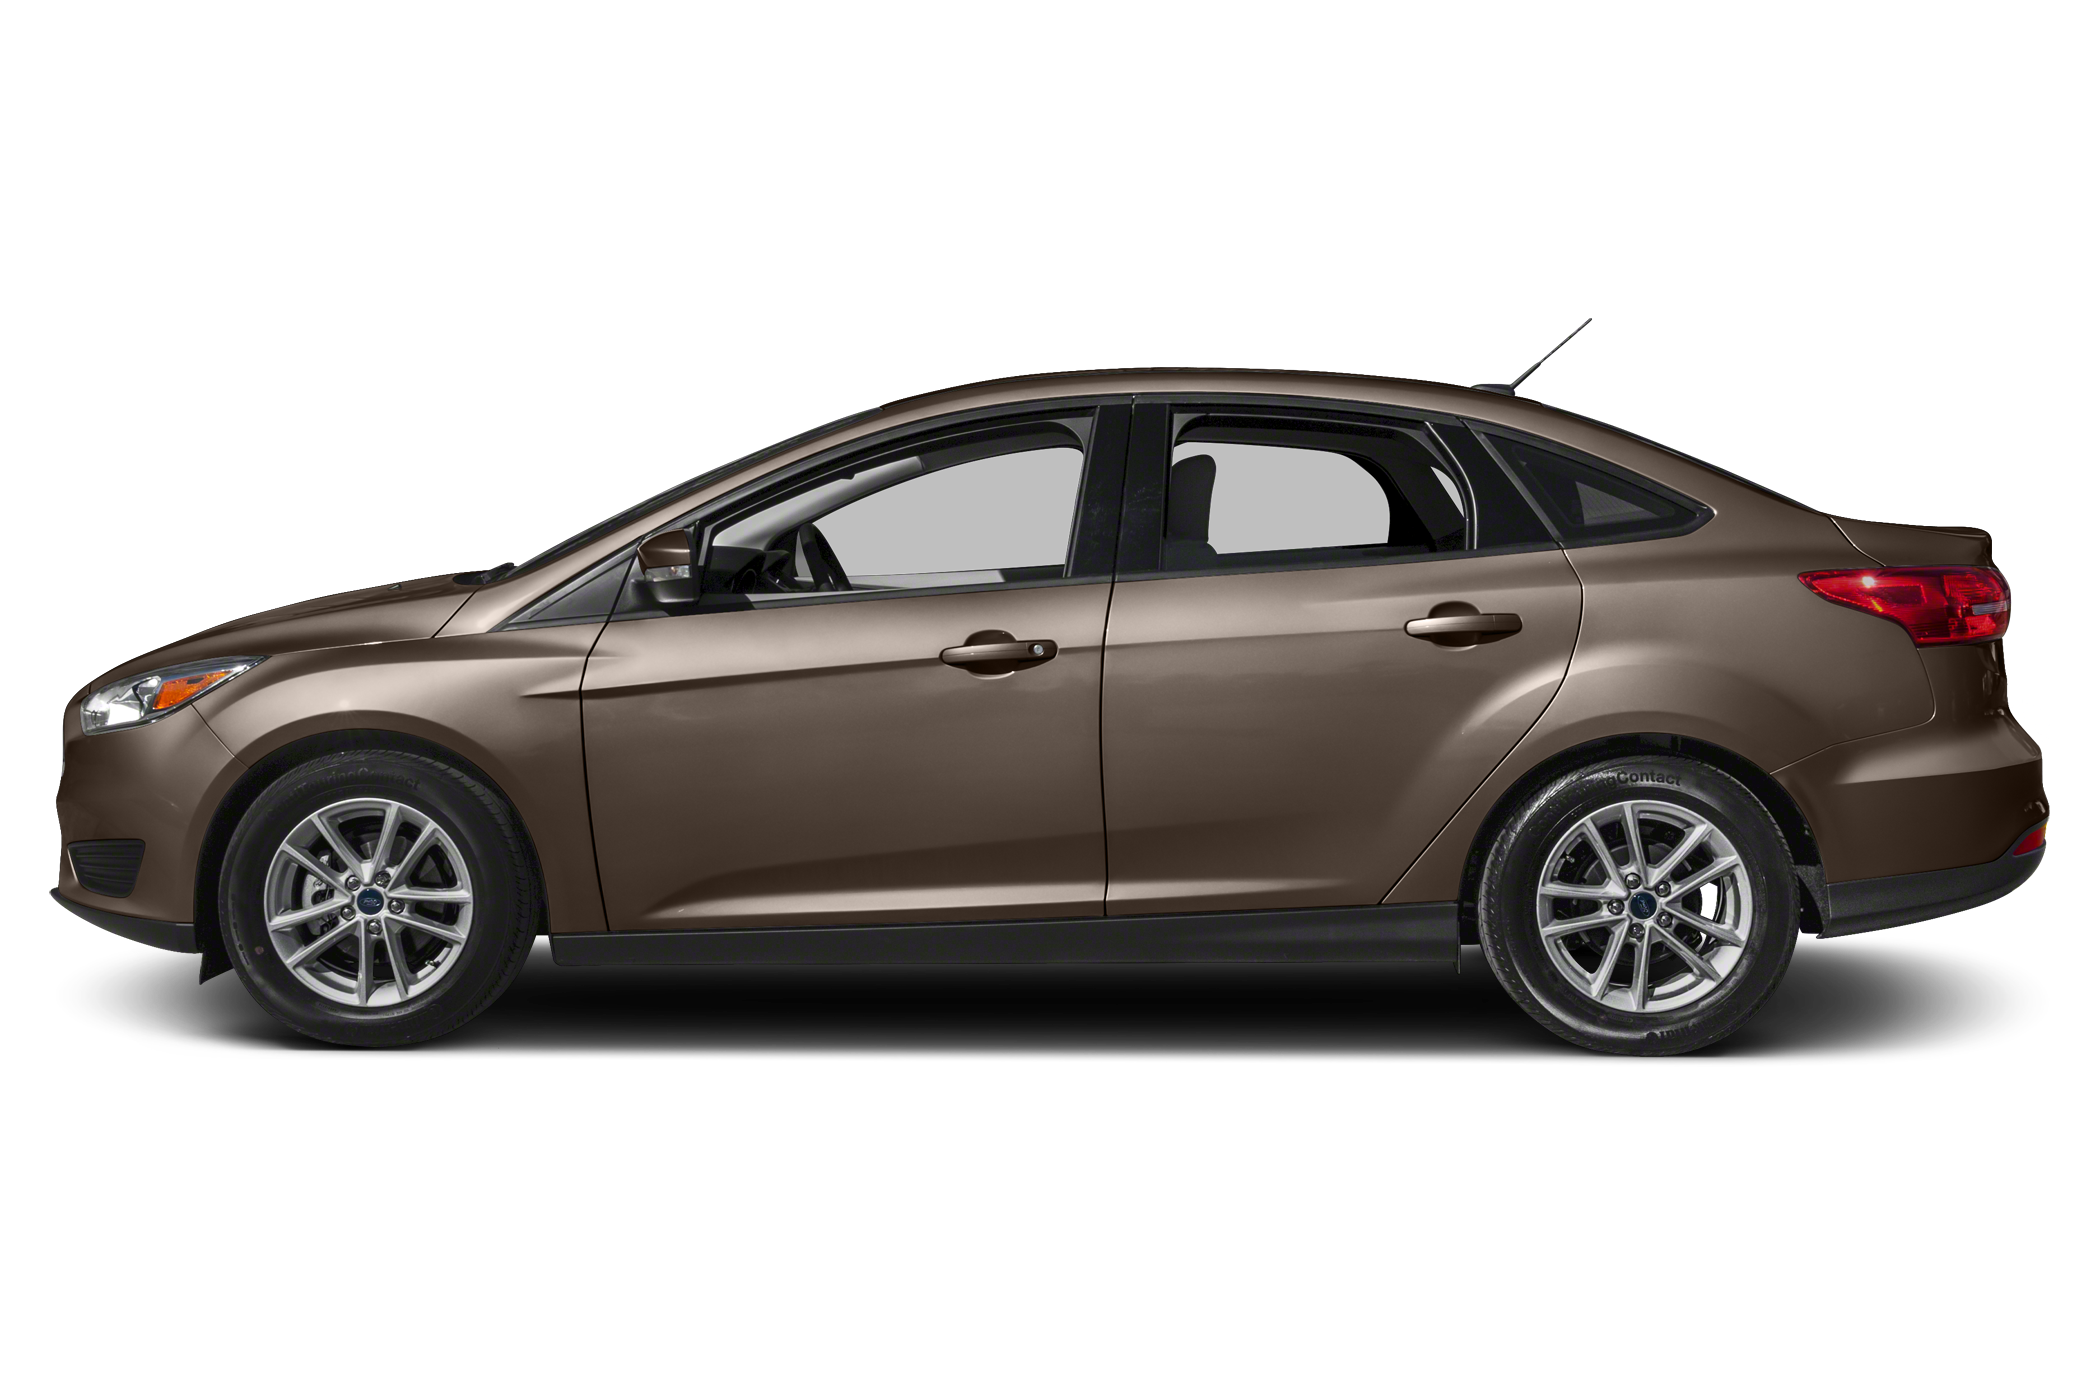 Ford Focus Sedan: Models, Generations and Details